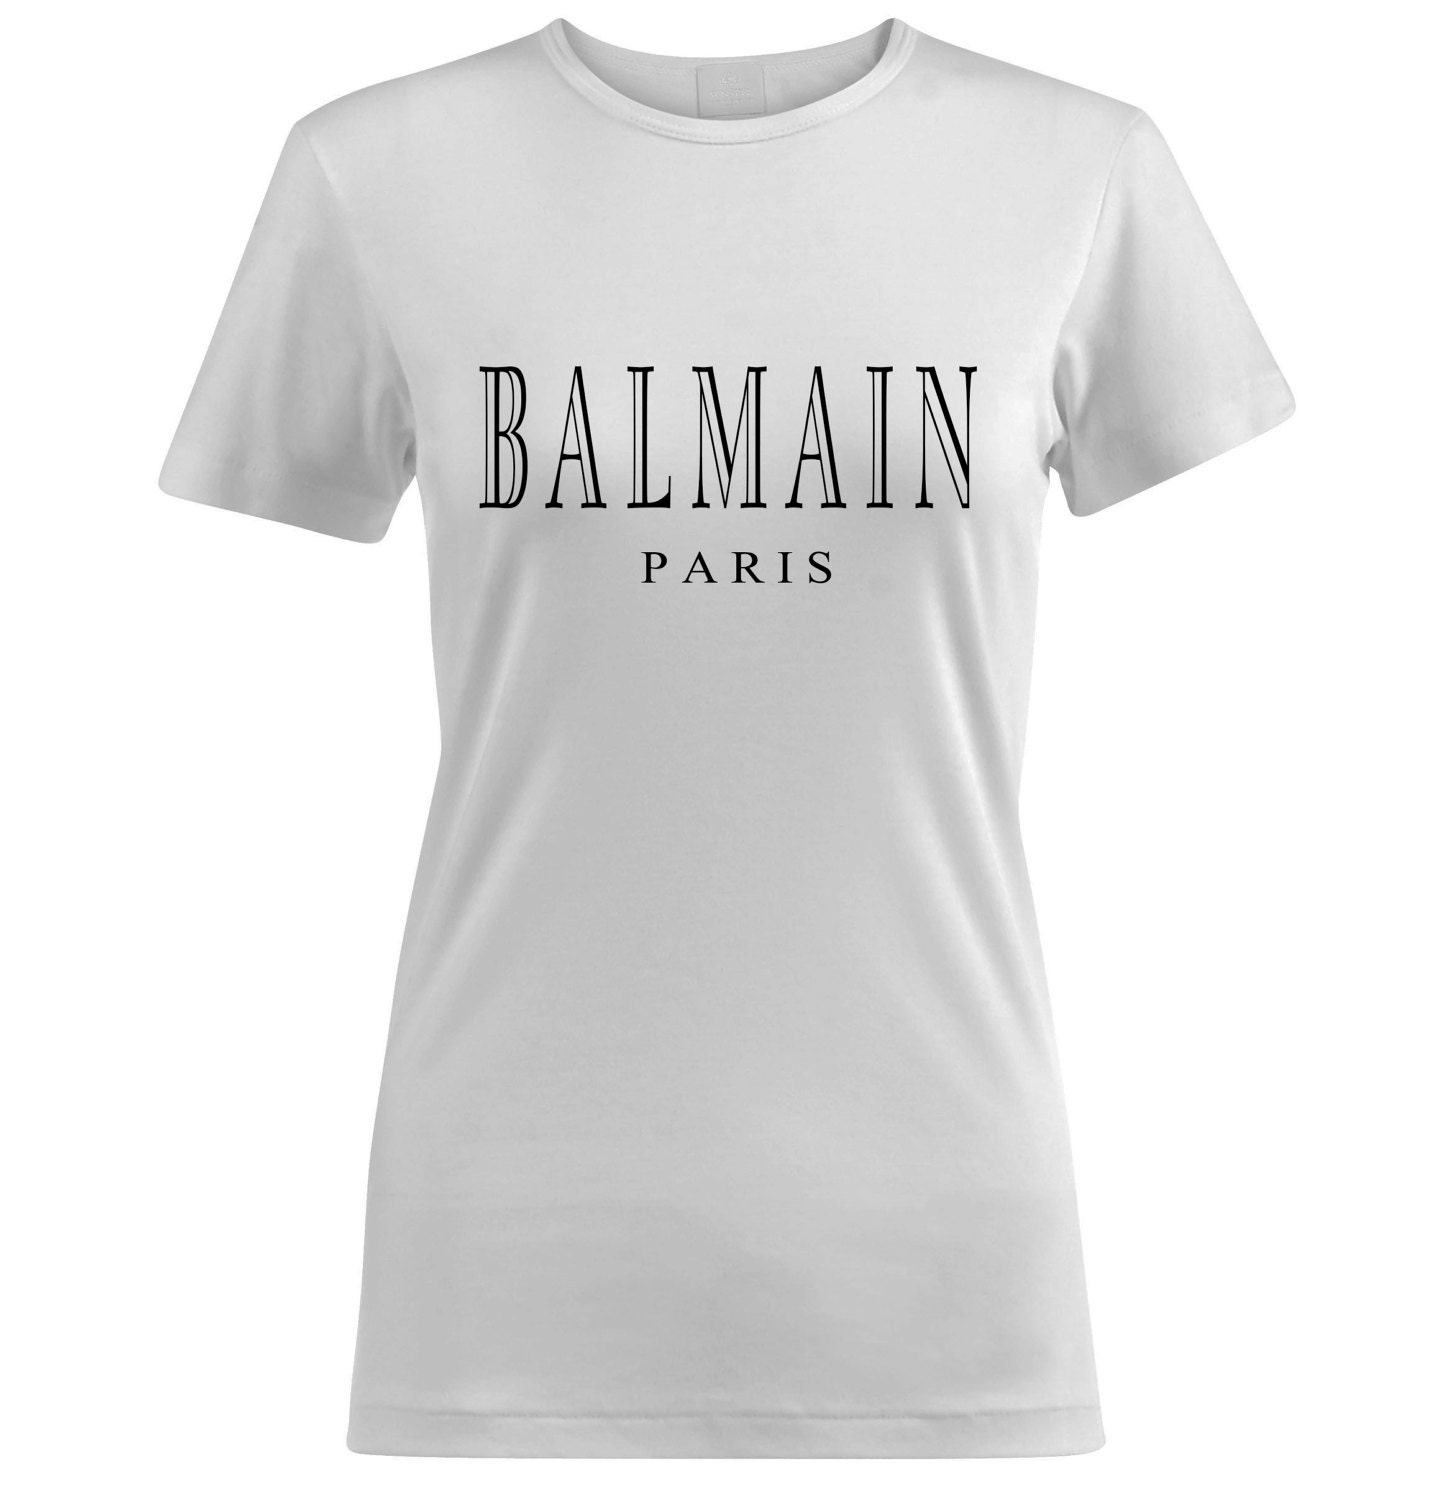 Balmain Paris Printed Women's T-Shirt